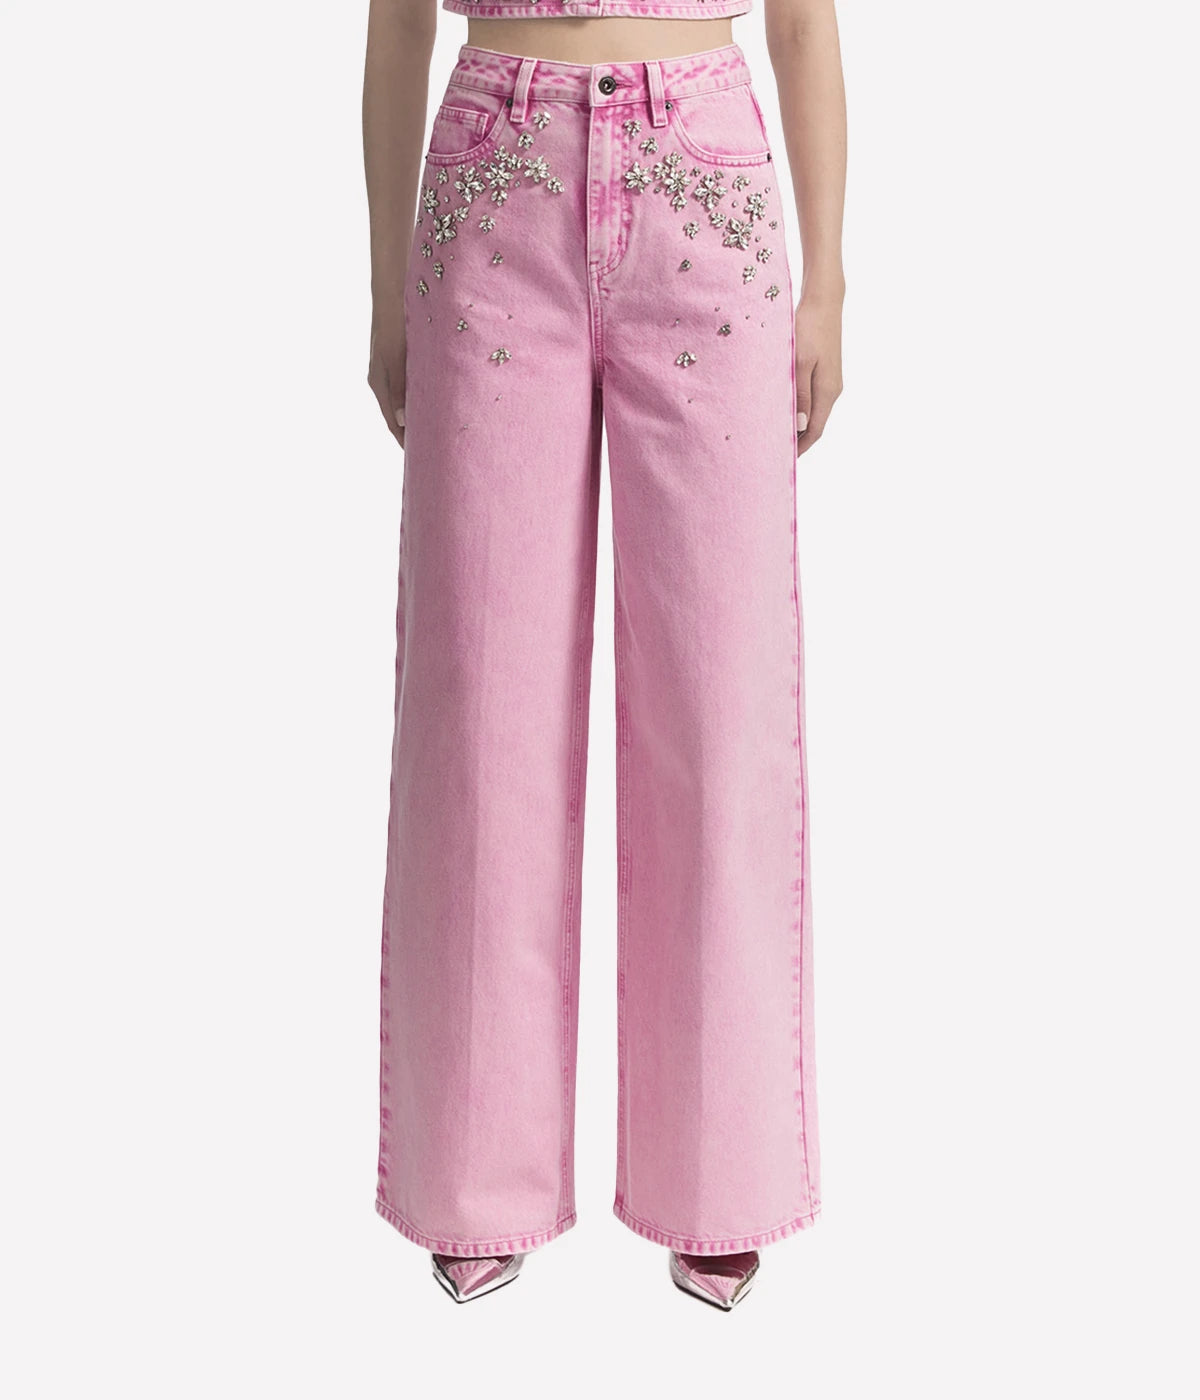 Embellished Jeans in Pink